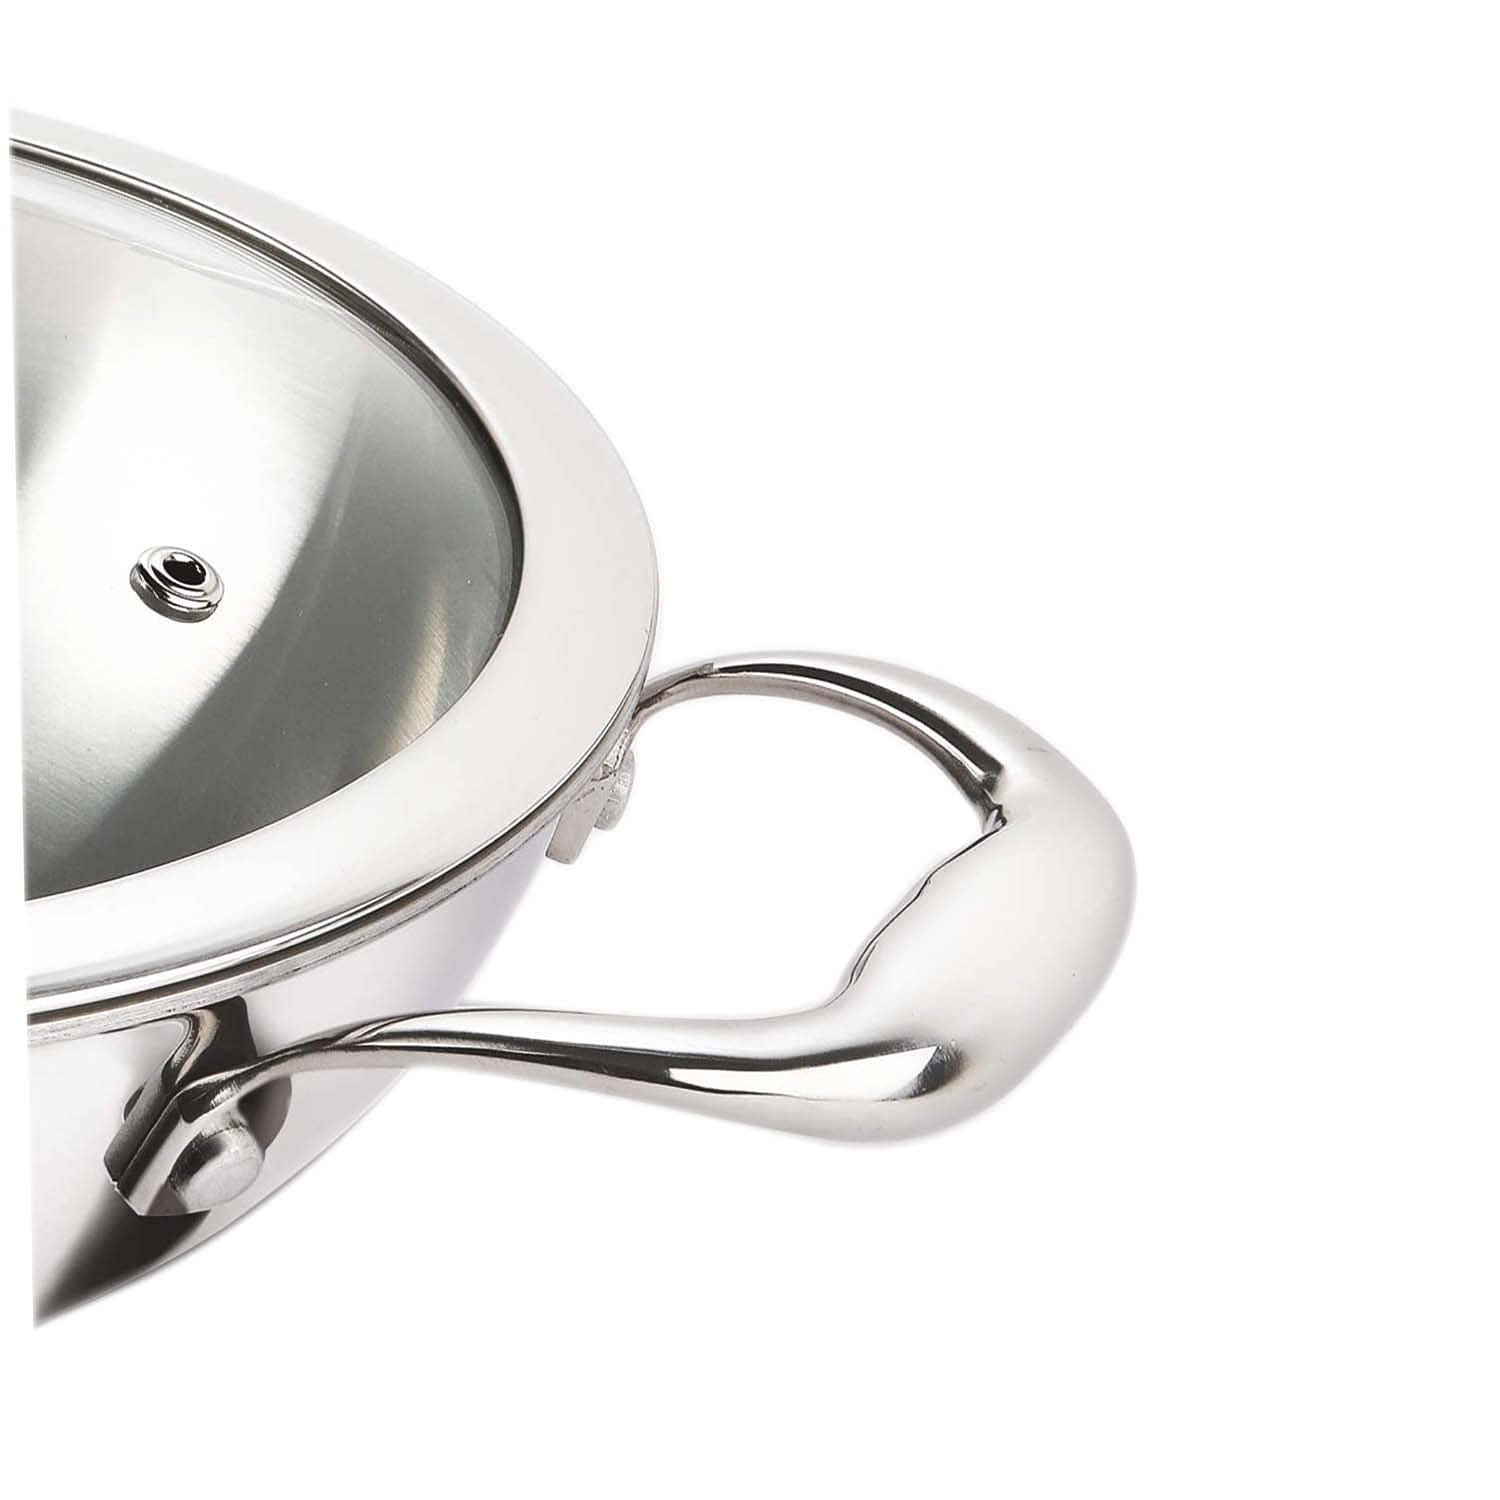 SRIYUG Tripple with Stainless Steel Deep Kadhai Cookware Triply Stainless Steel Wok Pan With Glass Lid